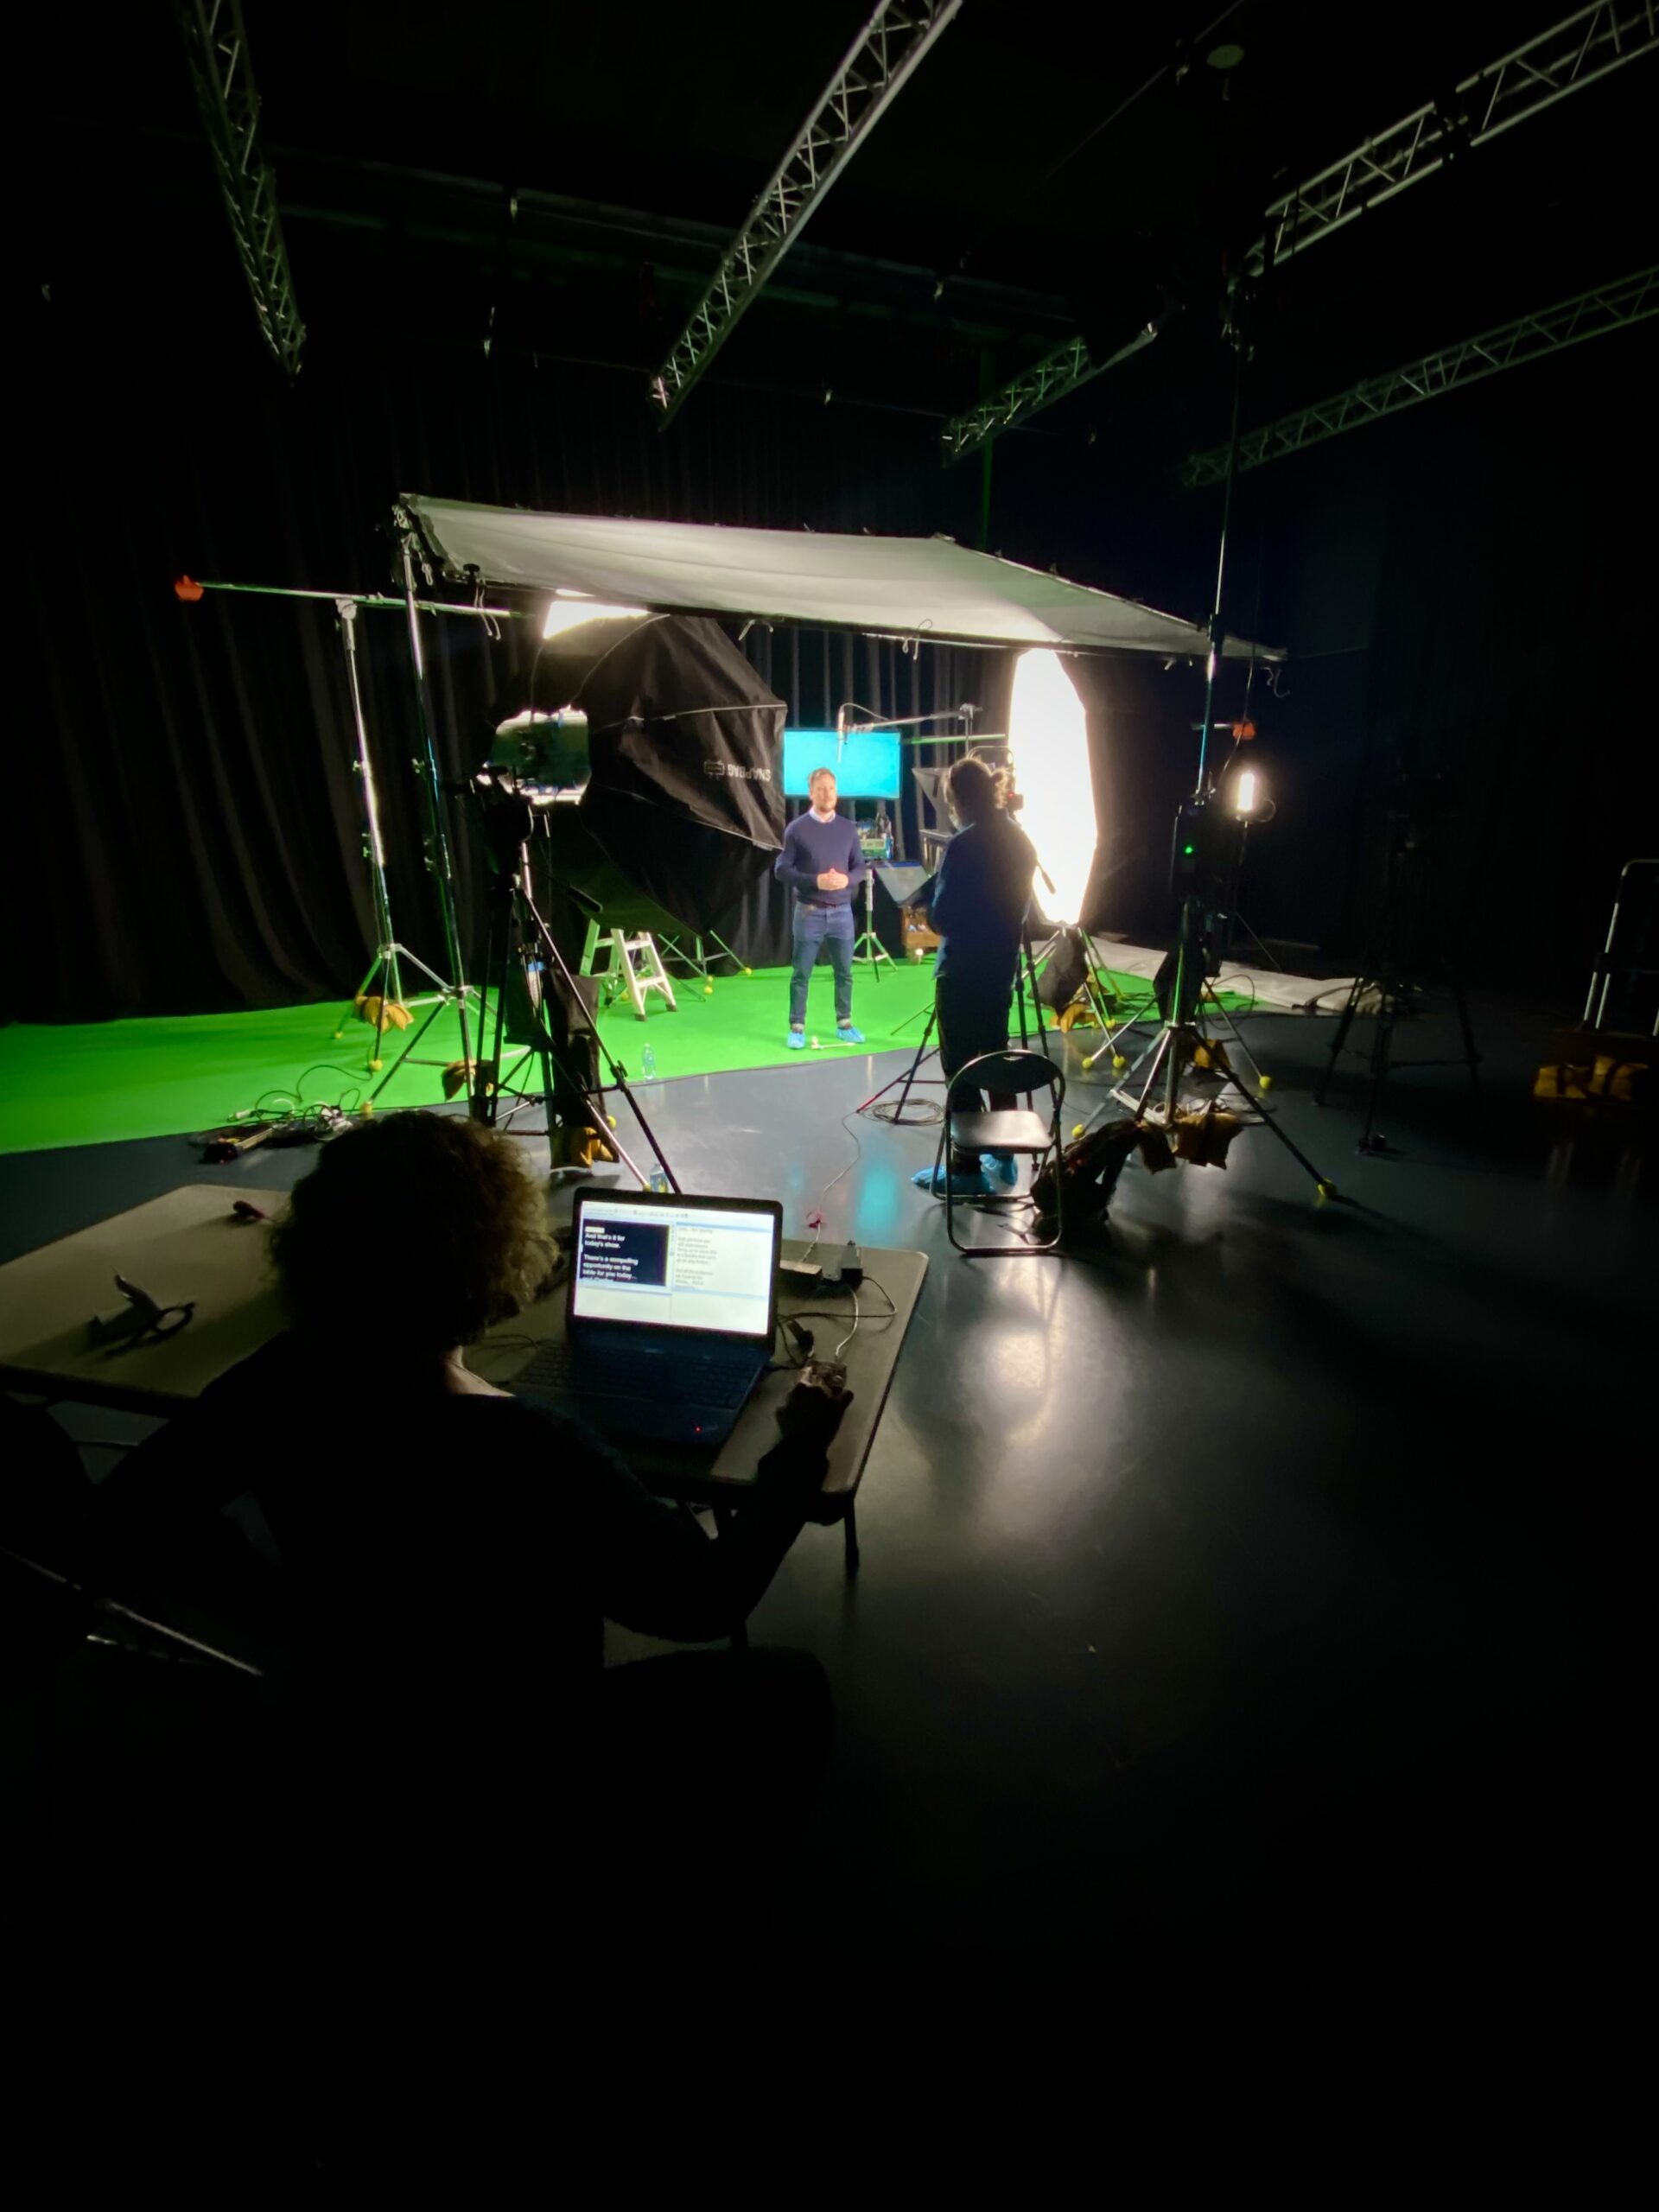 Video Production Sydney